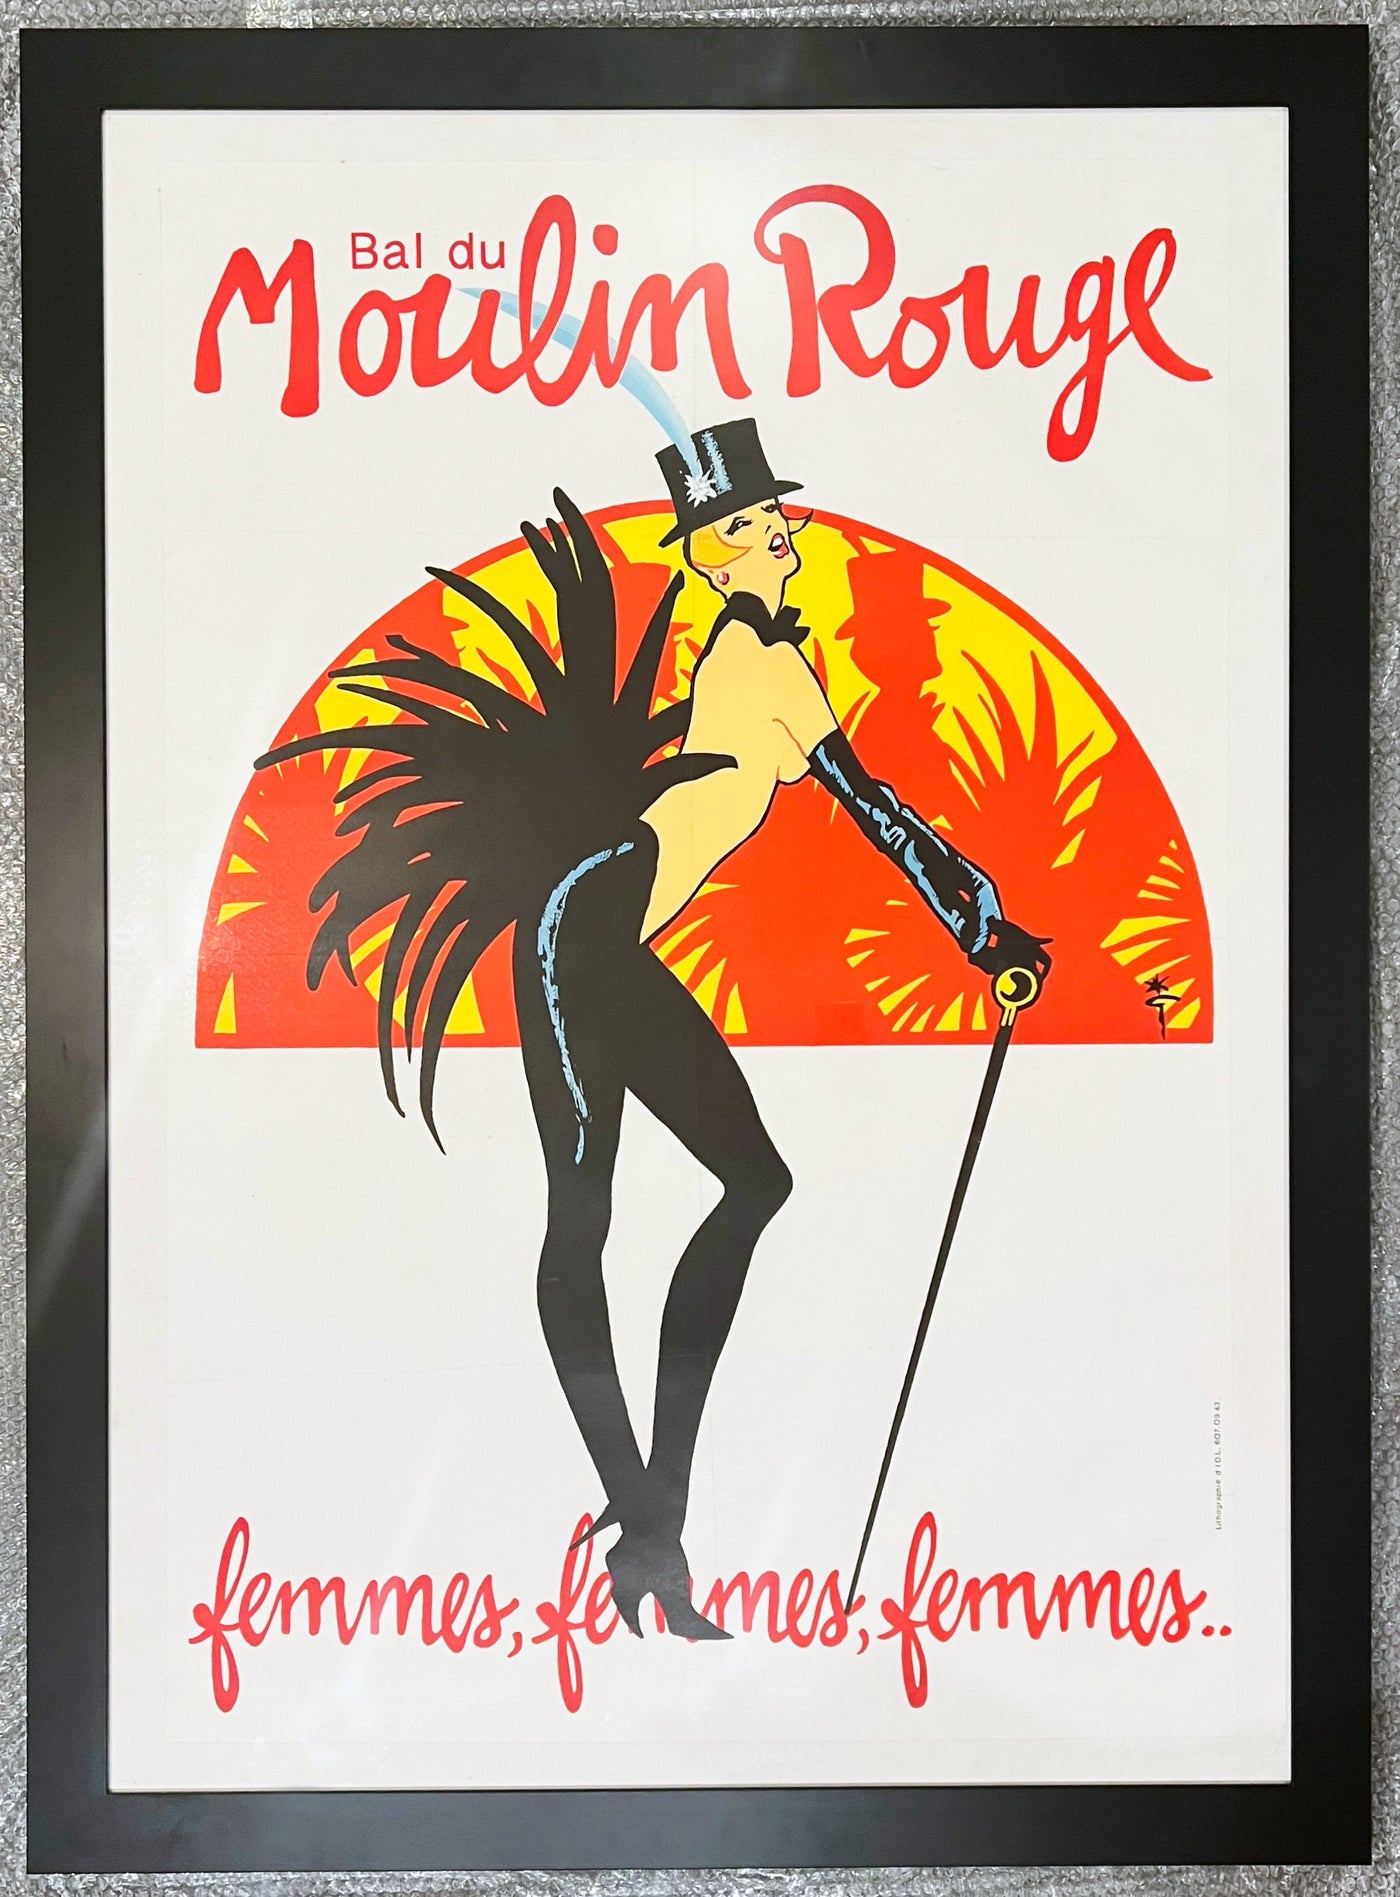 Rene Gruau Bal Du Moulin Rouge femmes femmes femmes 1983